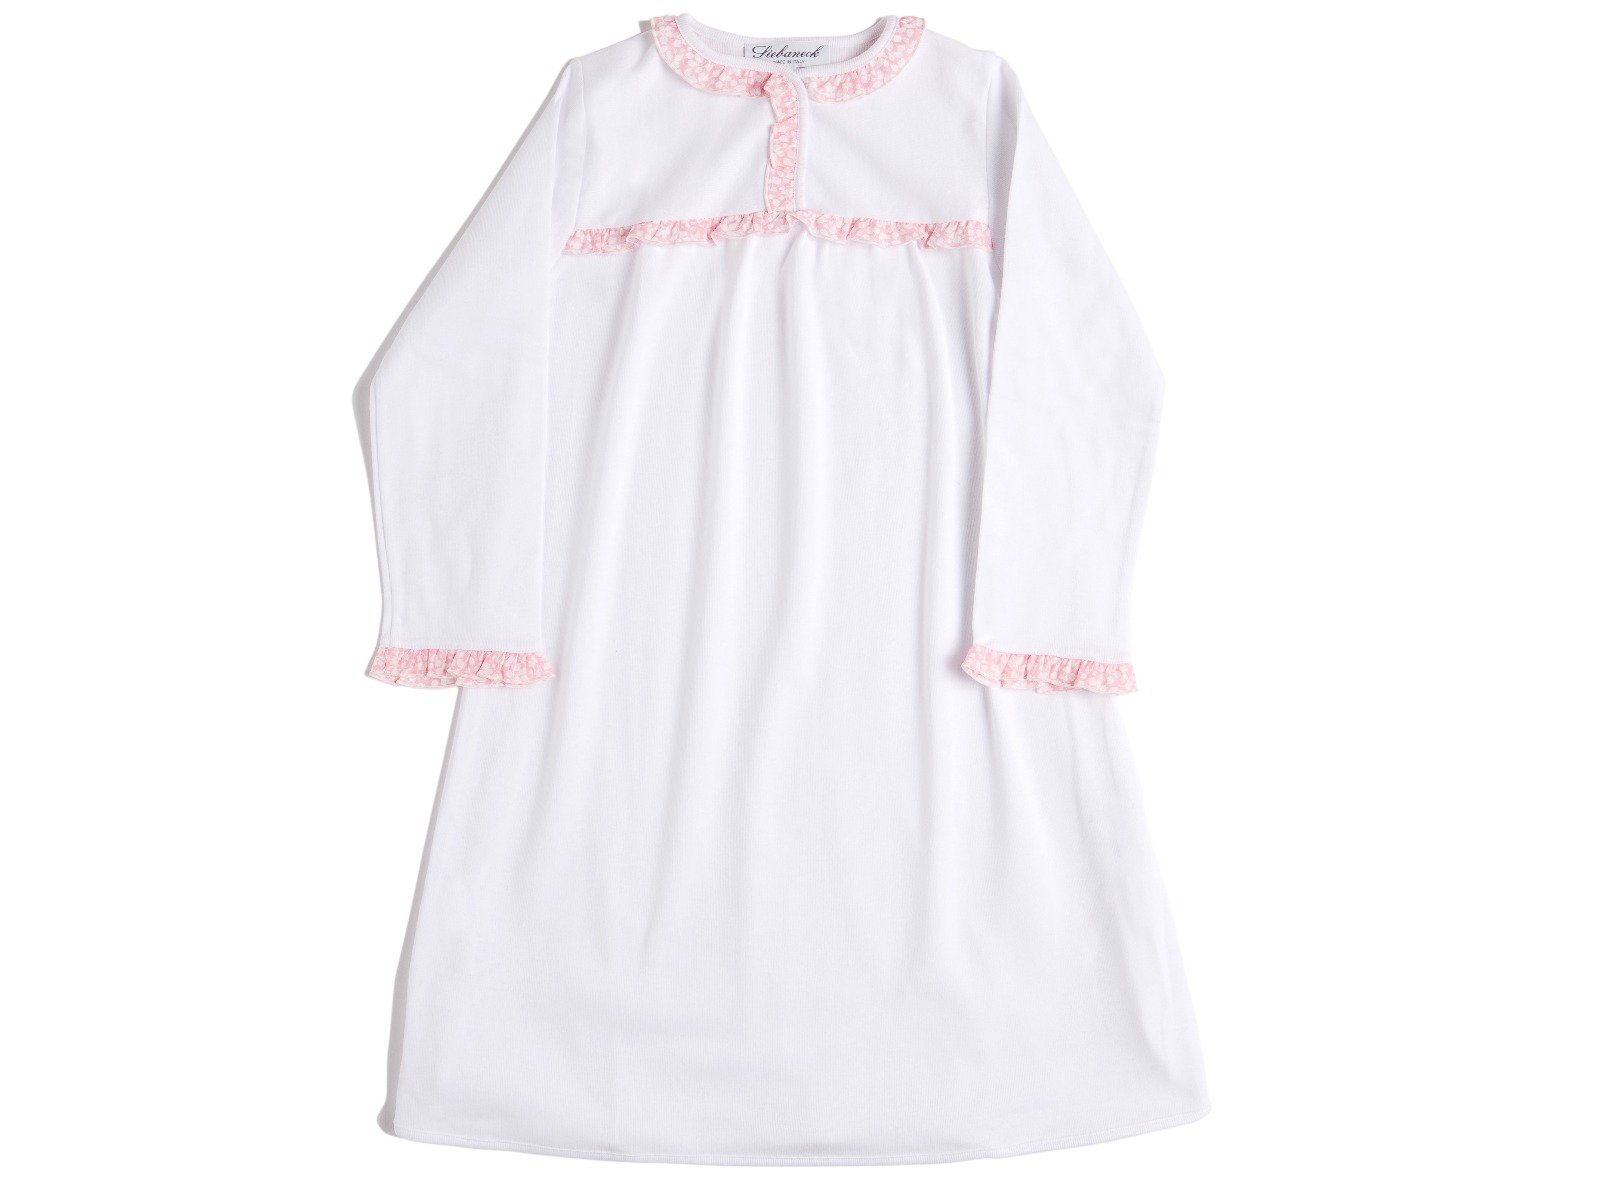 Siebaneck, i pigiami artigianali italiani: - bambina - mod. 100 Bimba bianco/ fiori rosa